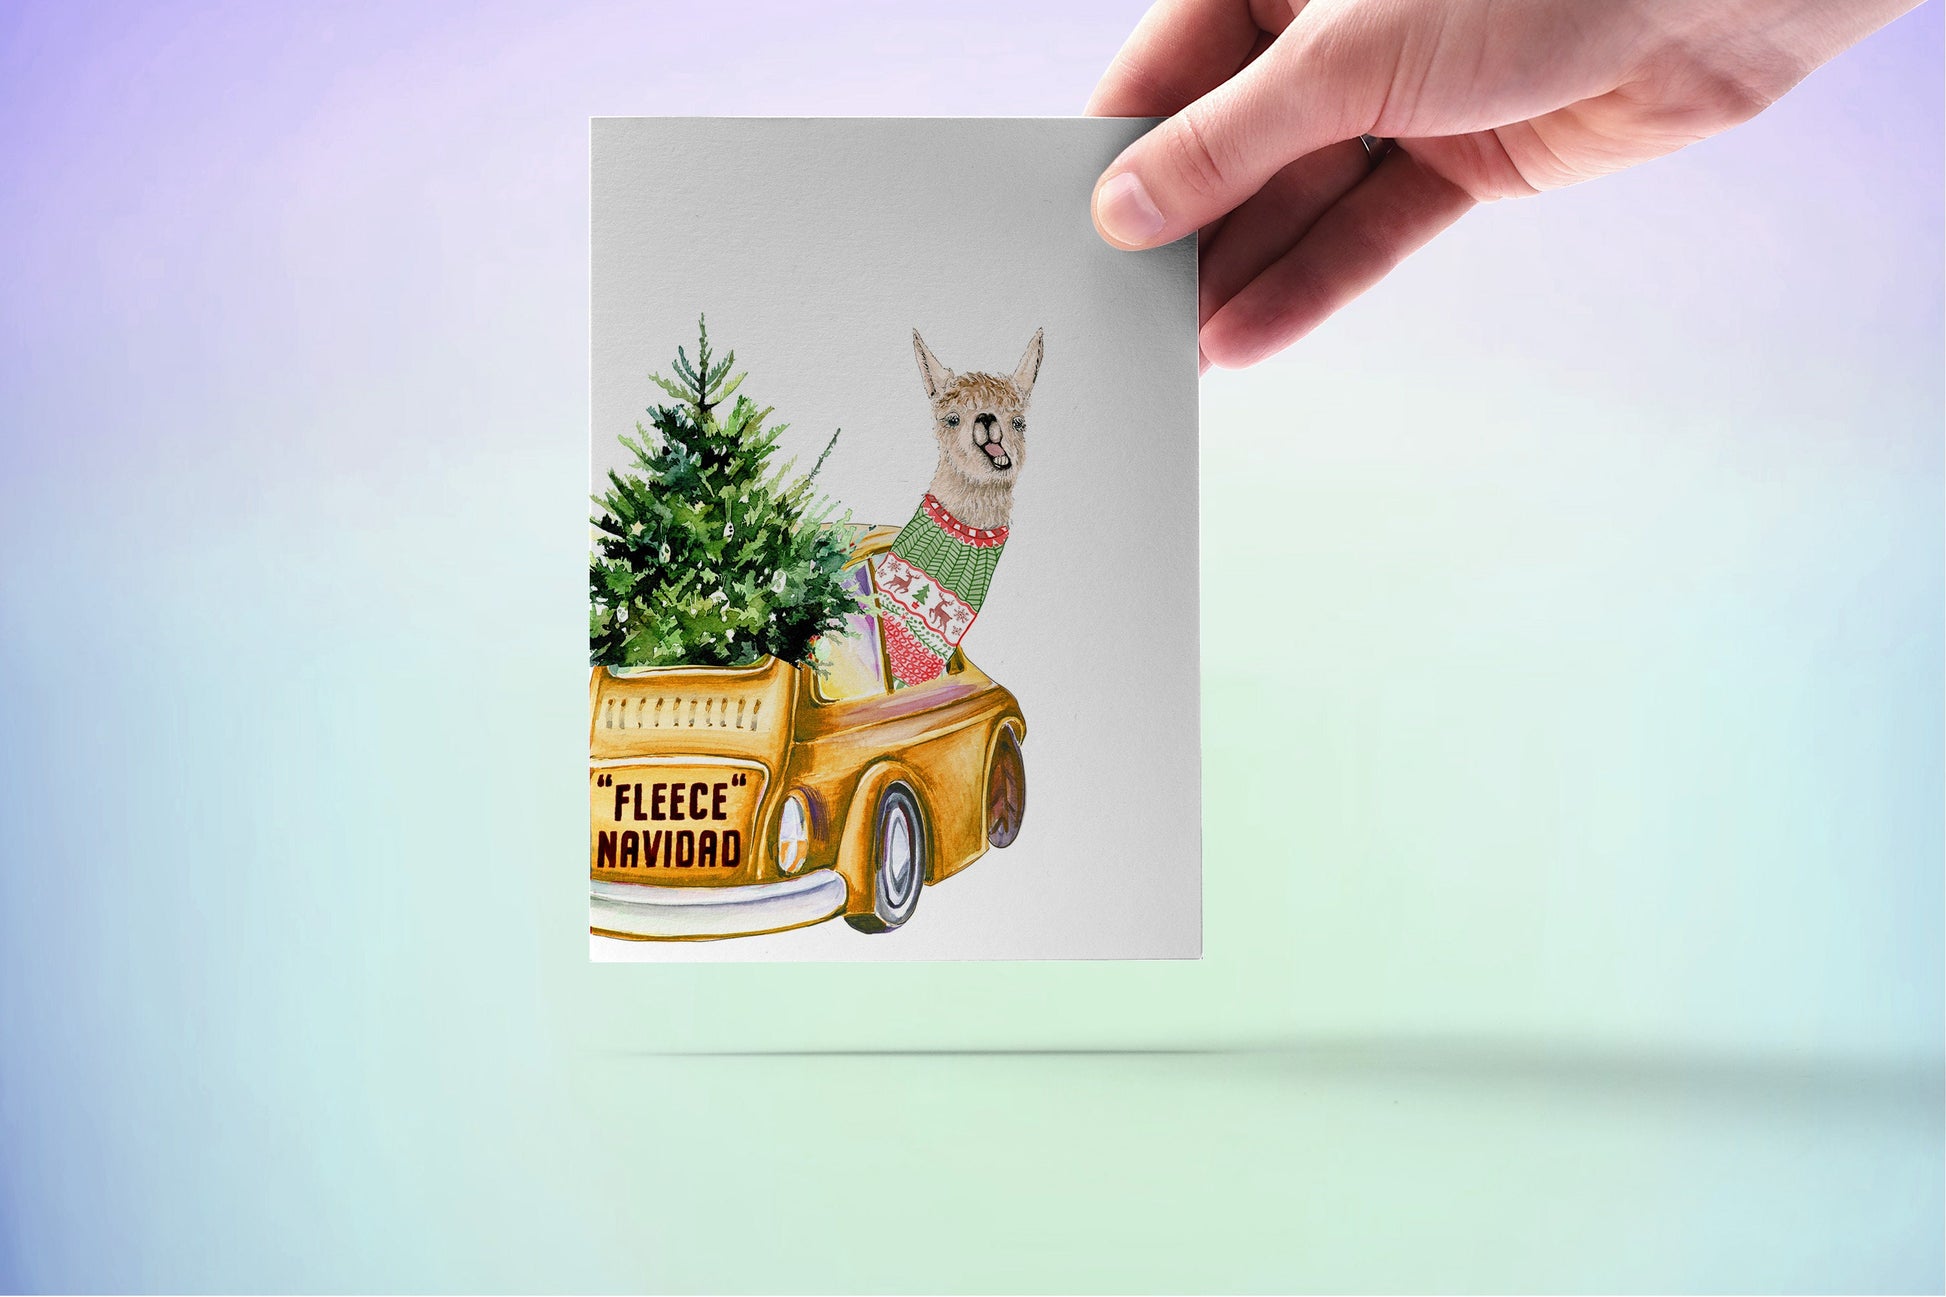 Llama Christmas Card Funny - Feliz Navidad - Alpaca Holiday Cards For Best Friends